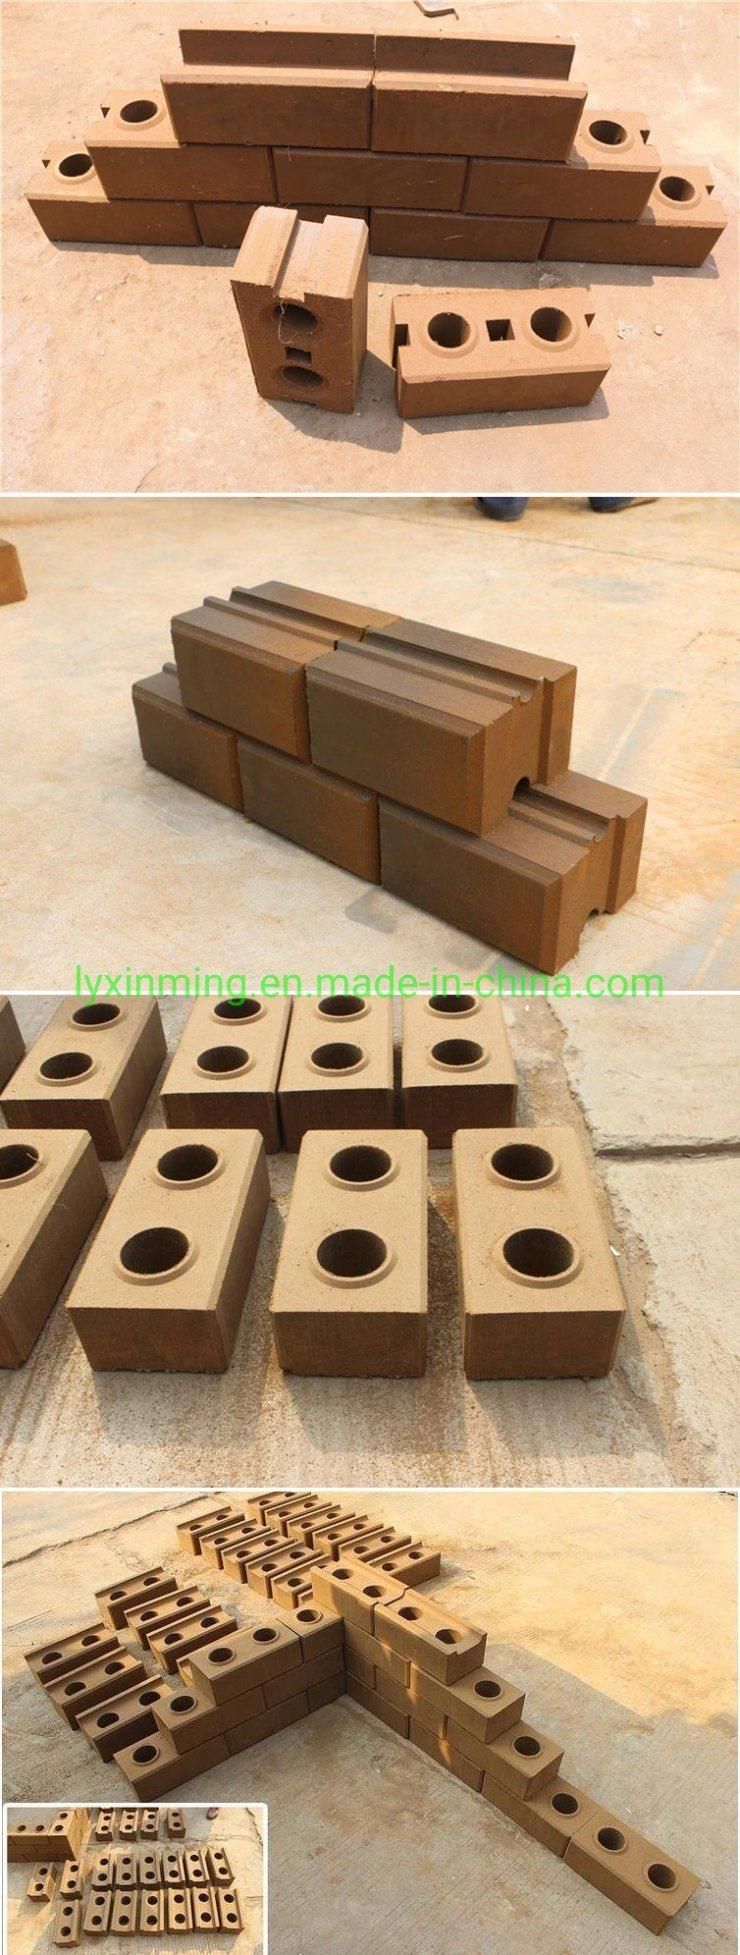 Wide Used Xm2-40 Block Making Machine Mud Brick Making Machine in India